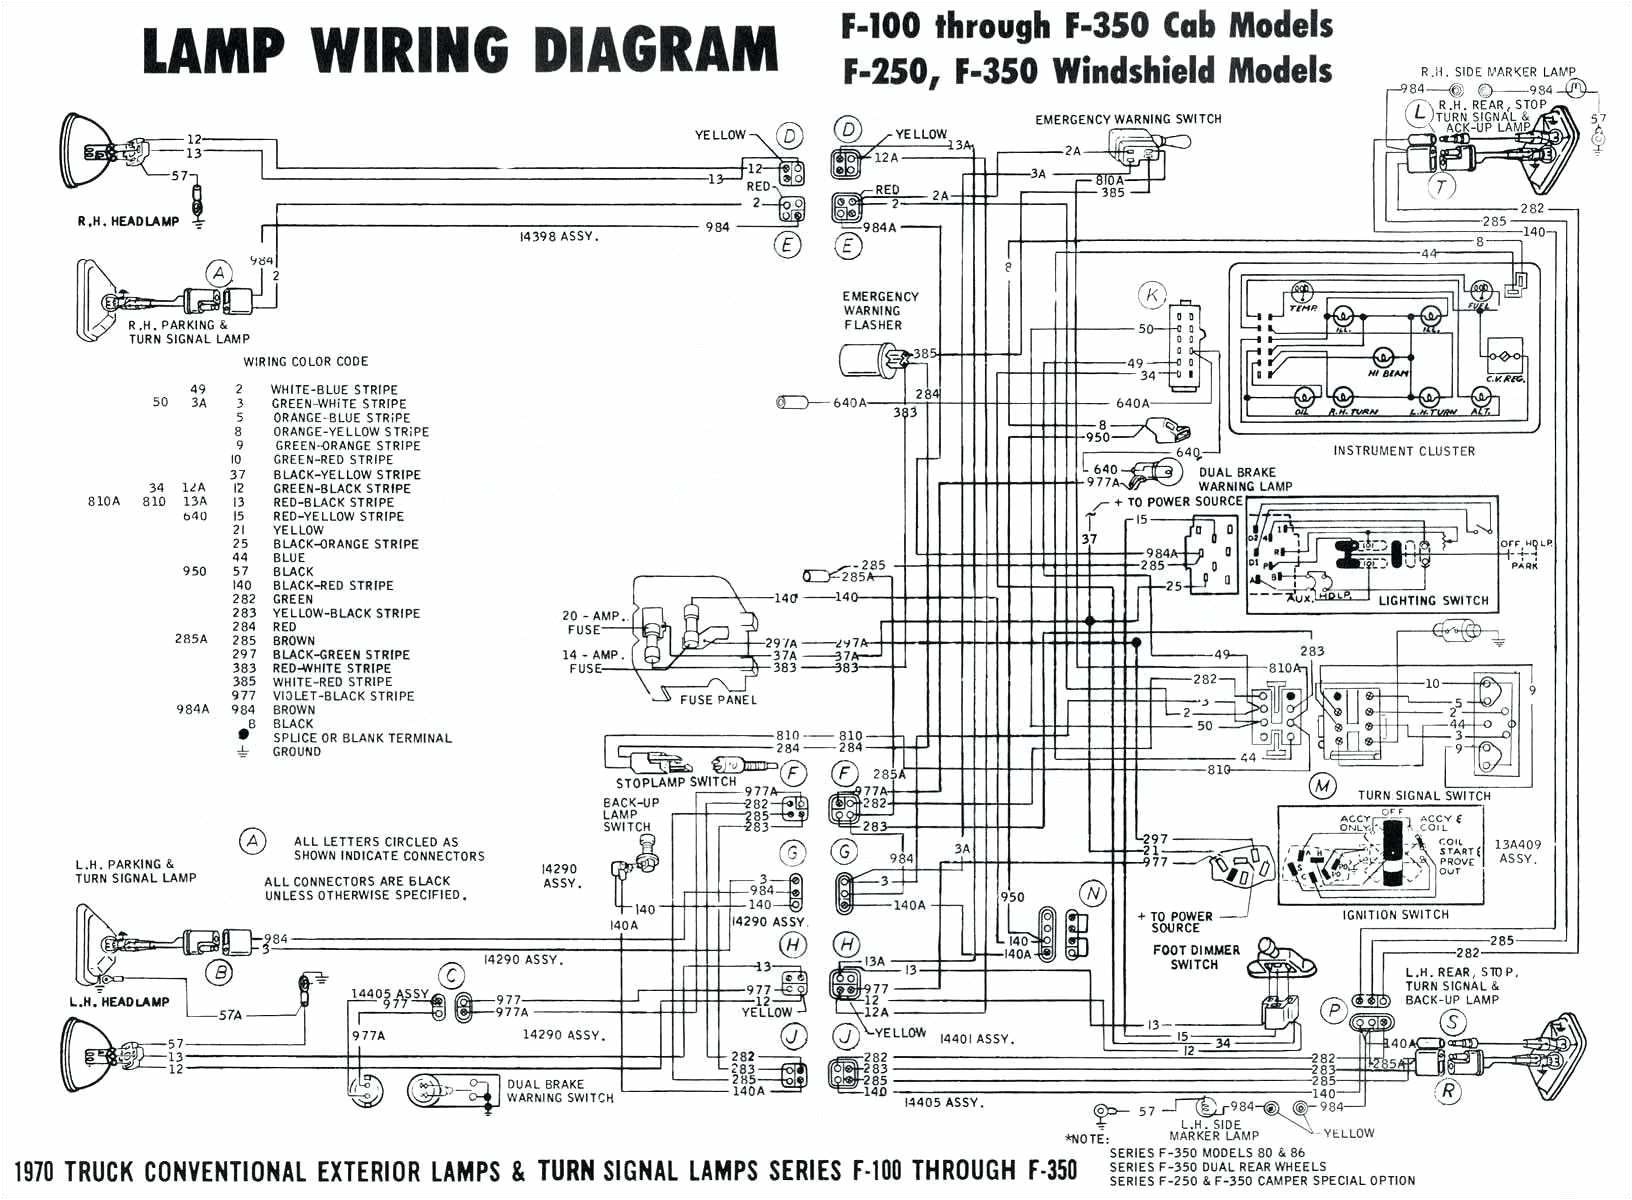 cfl42 dimming ballast wiring diagrams wiring diagrams advanced wiring schematics